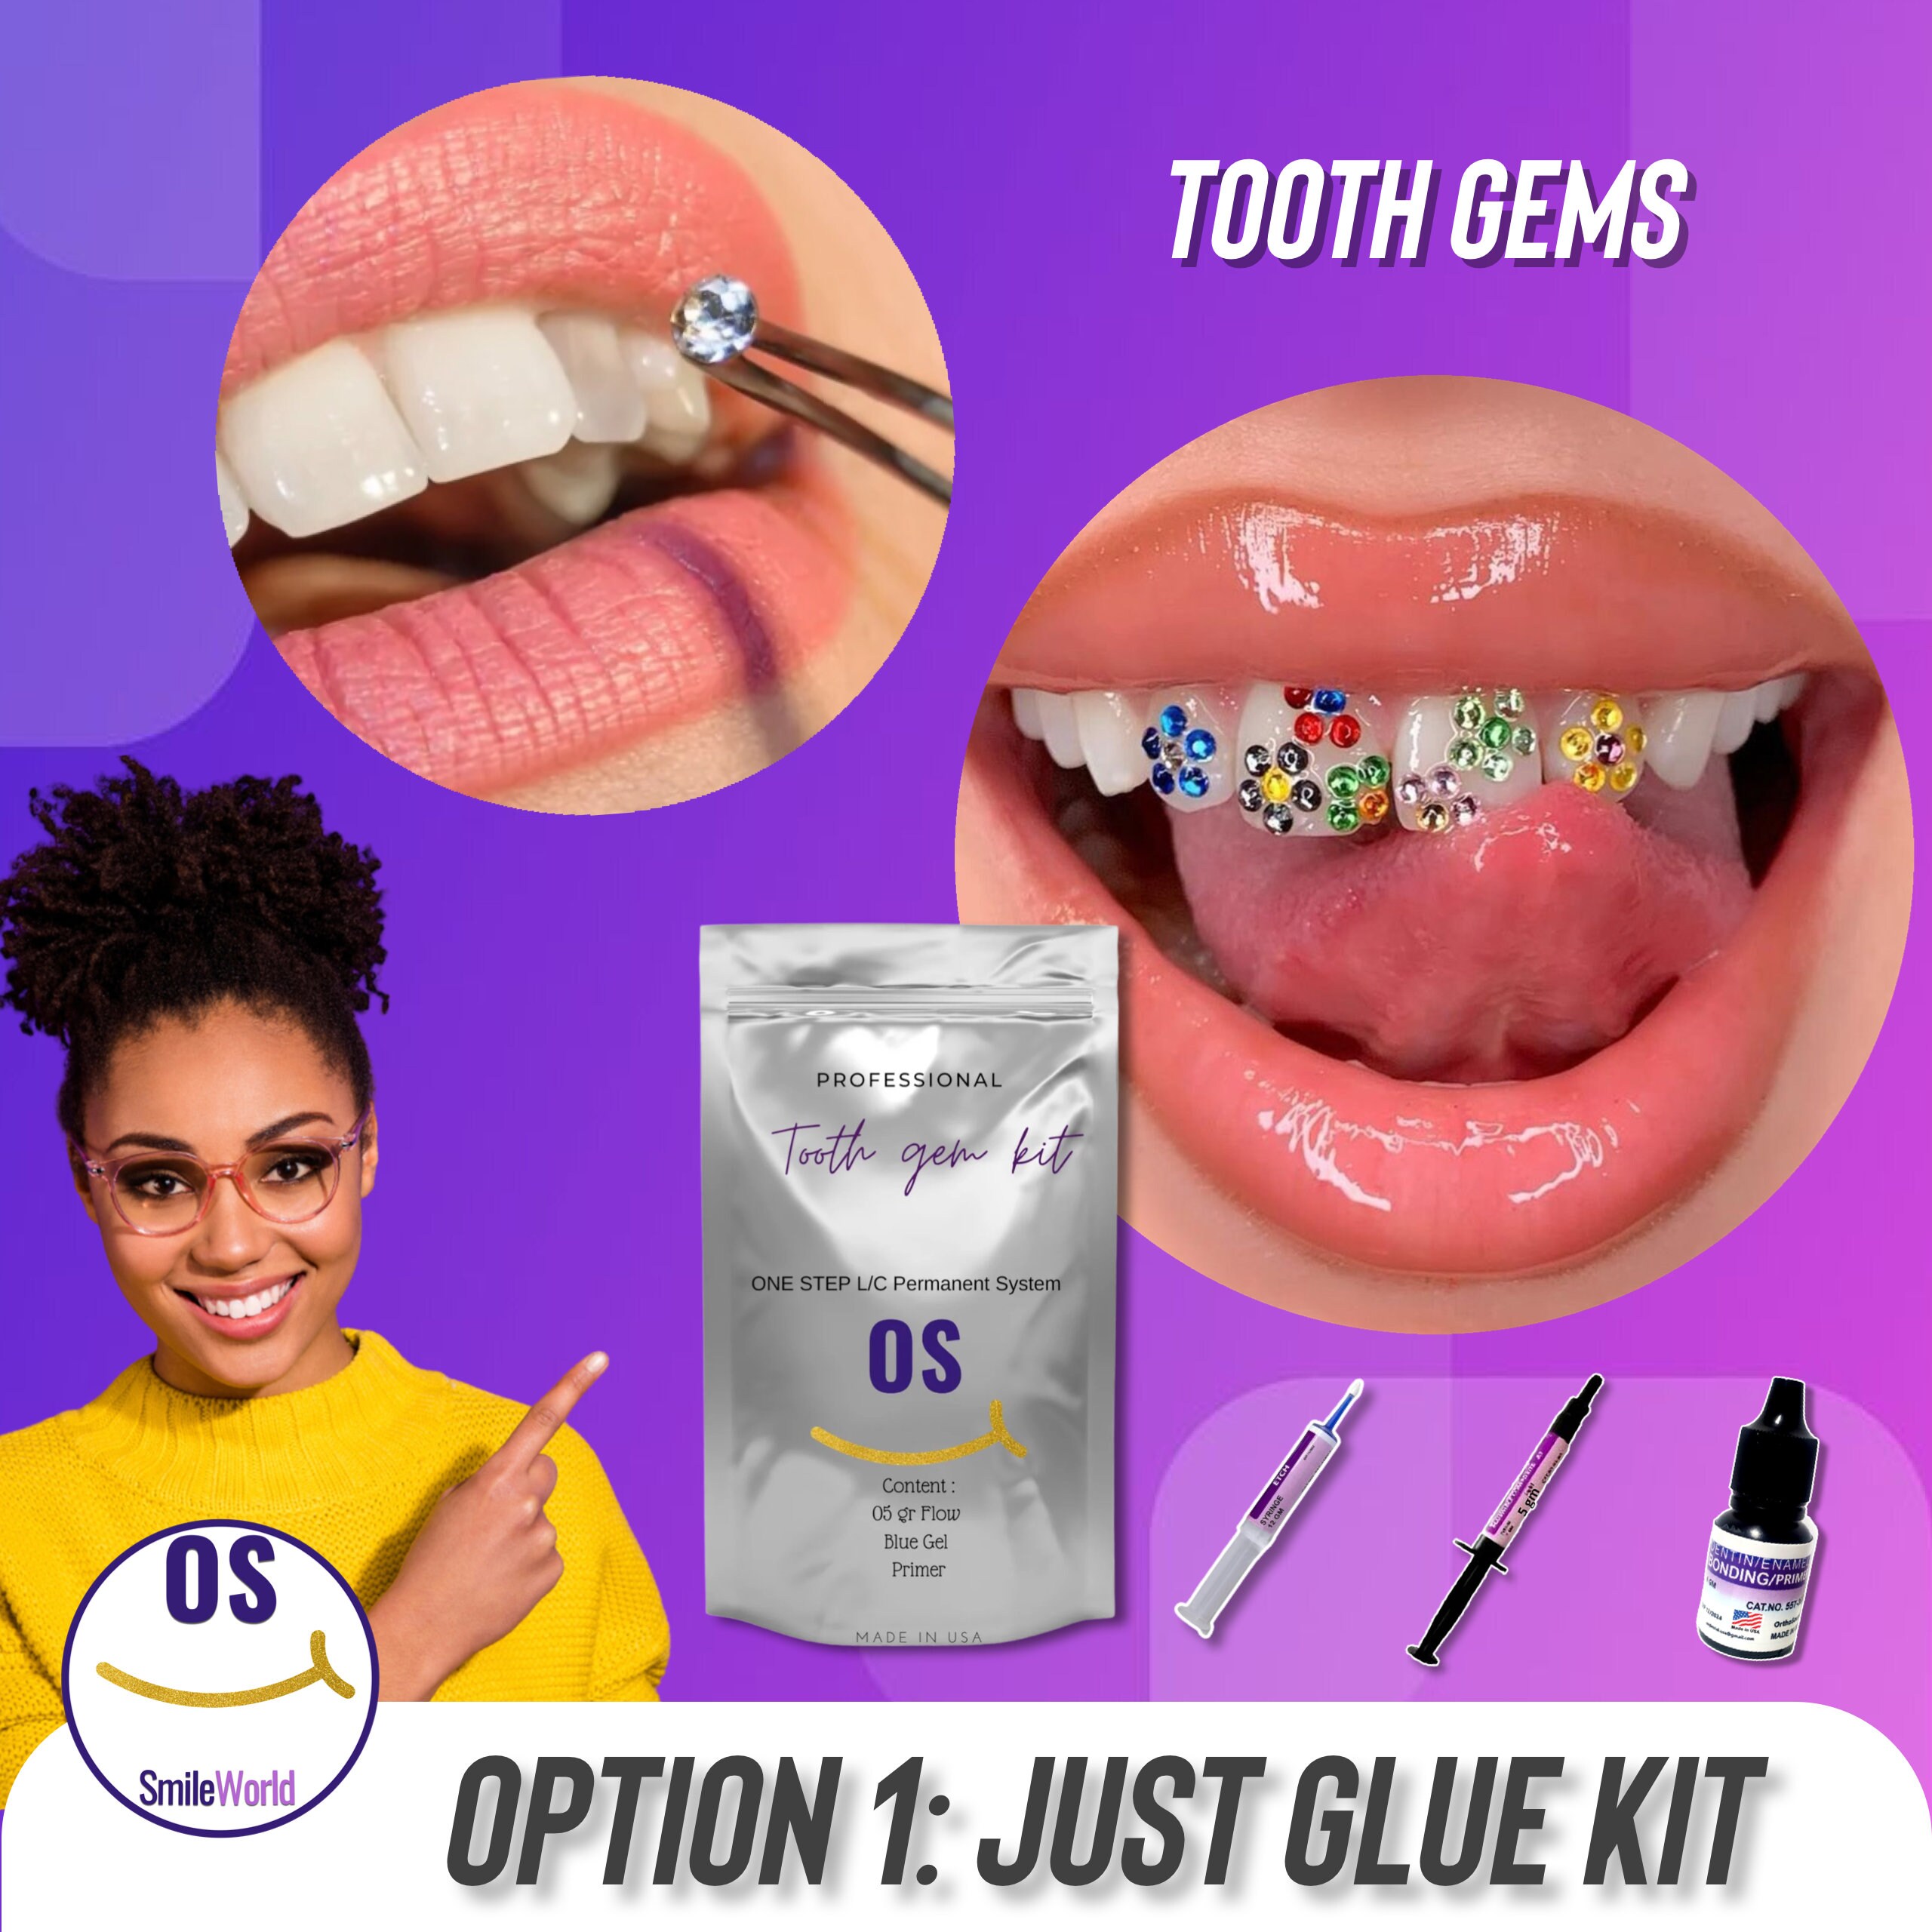 Professional Tooth Gem Kit